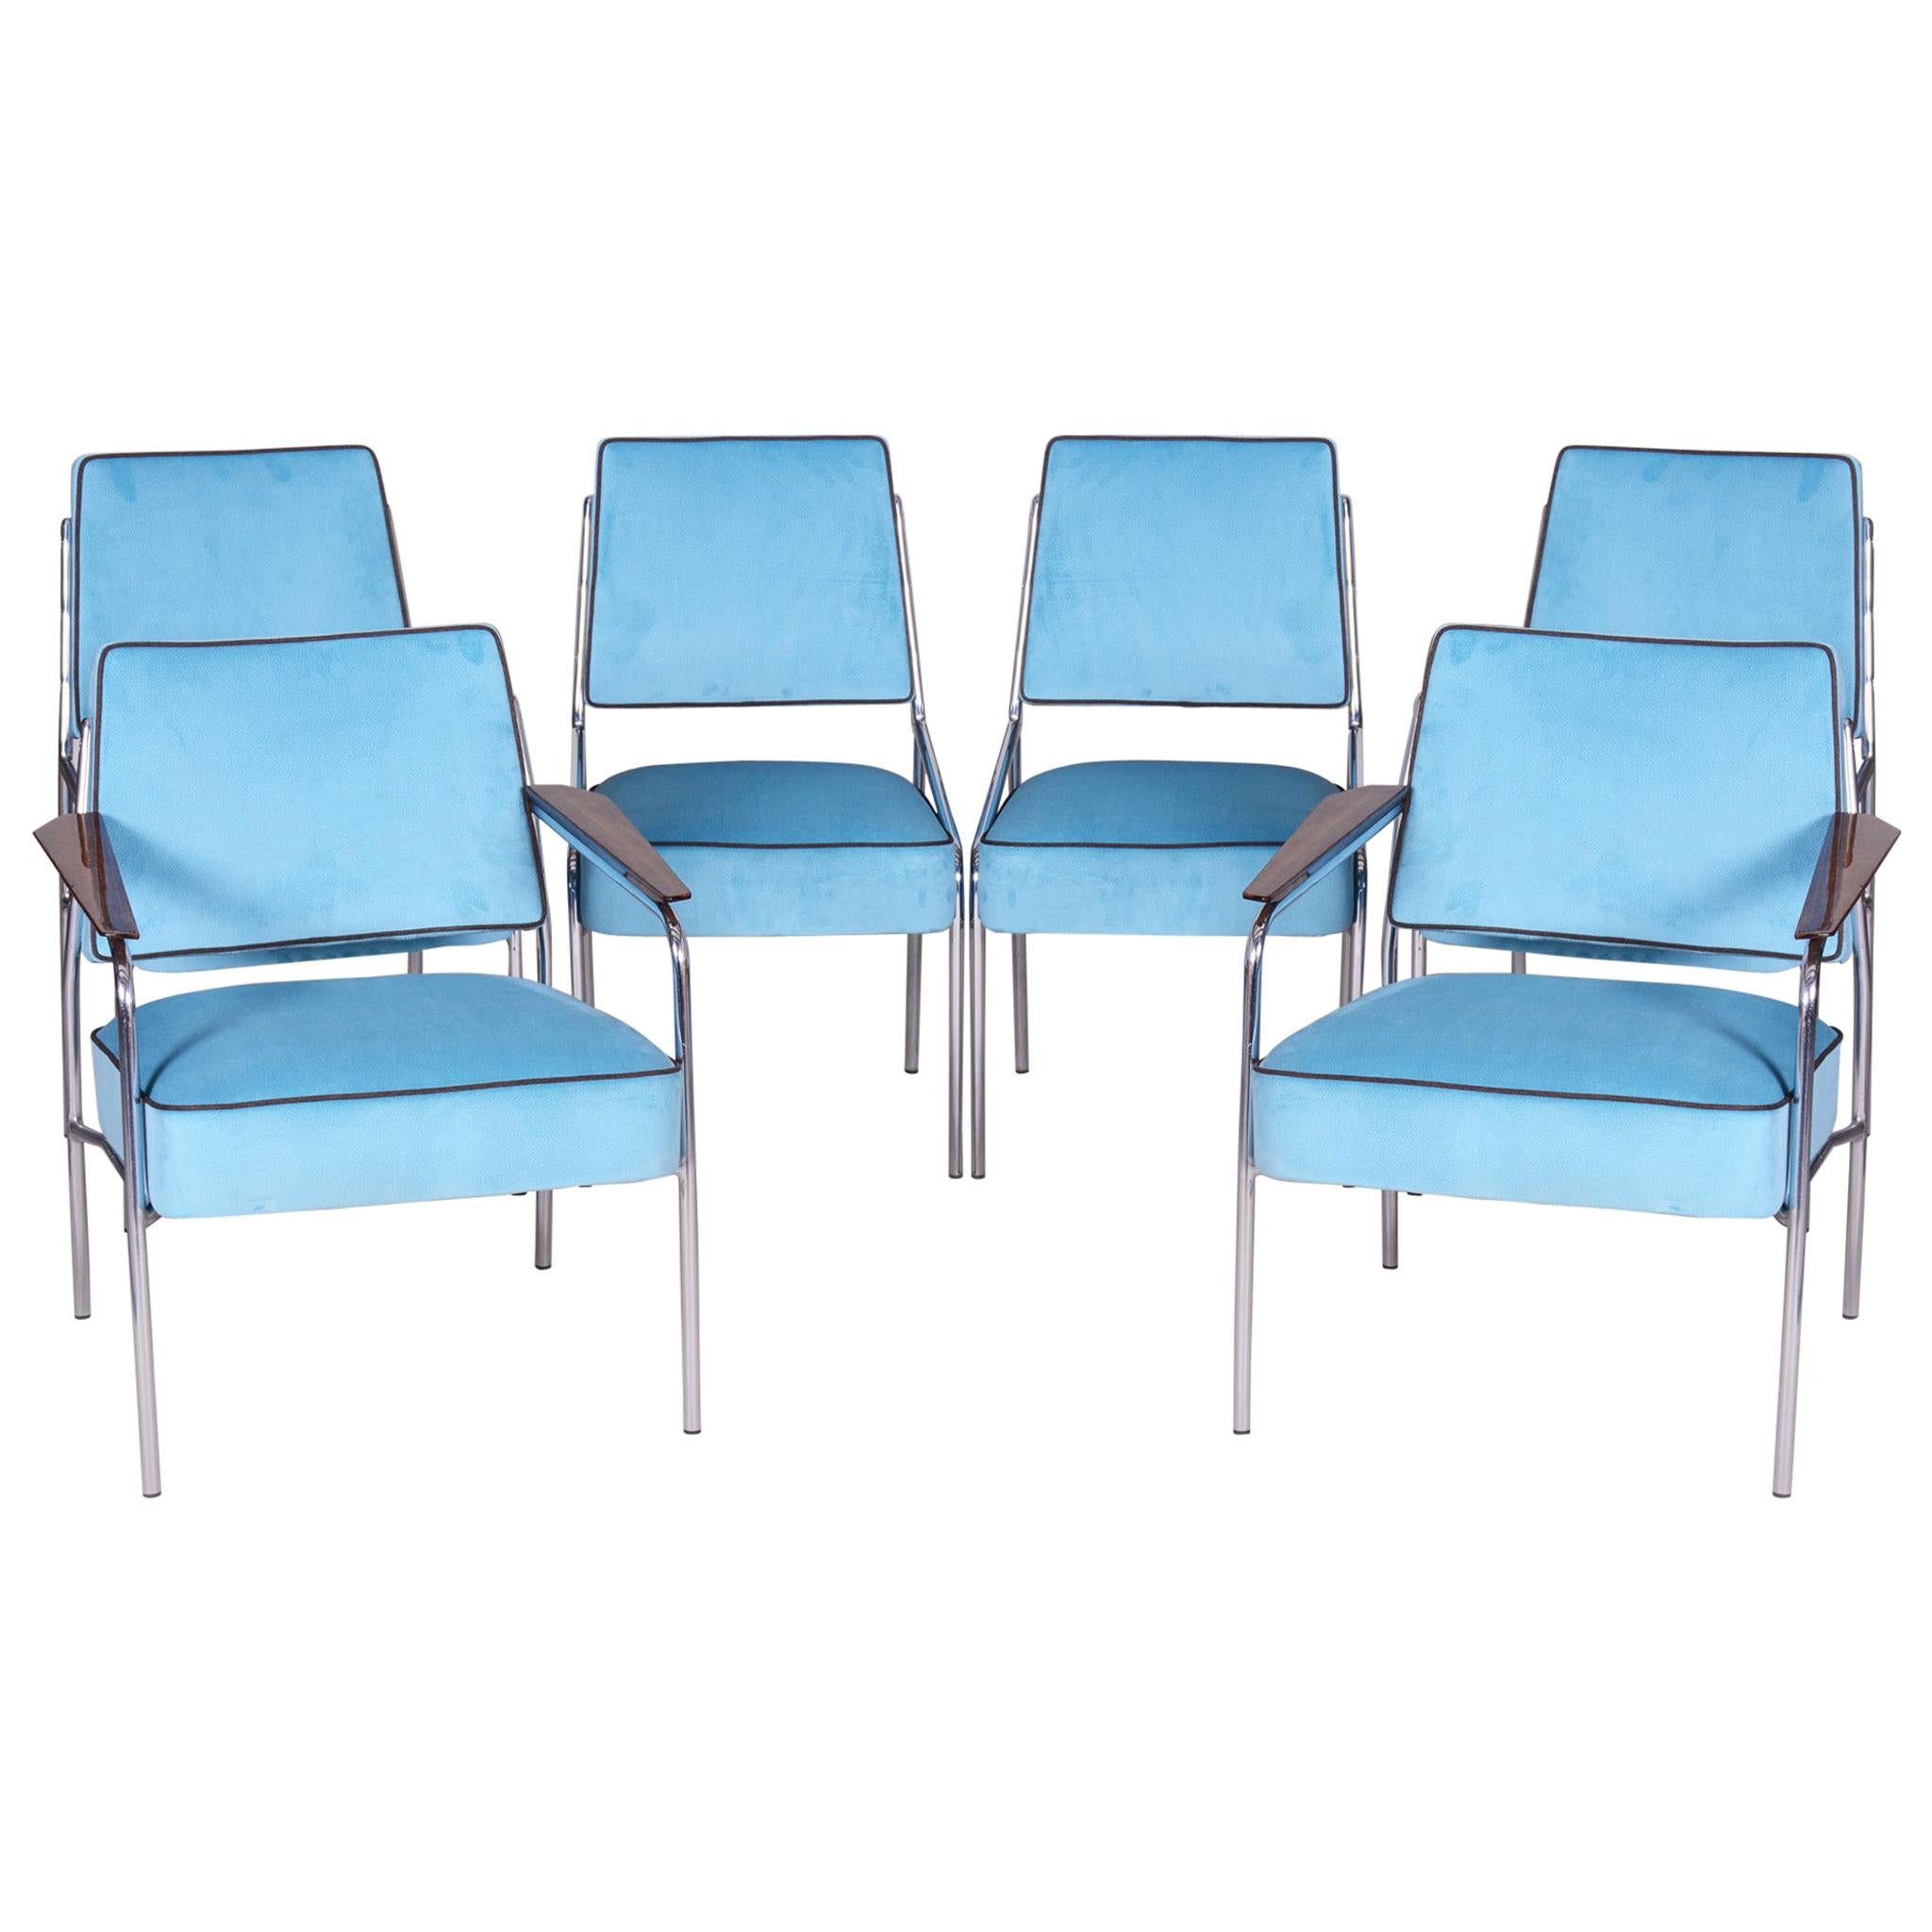 Tubular Chrome Bauhaus Blue Seating Set, 2 Armchairs and 4 Chairs, 1940s